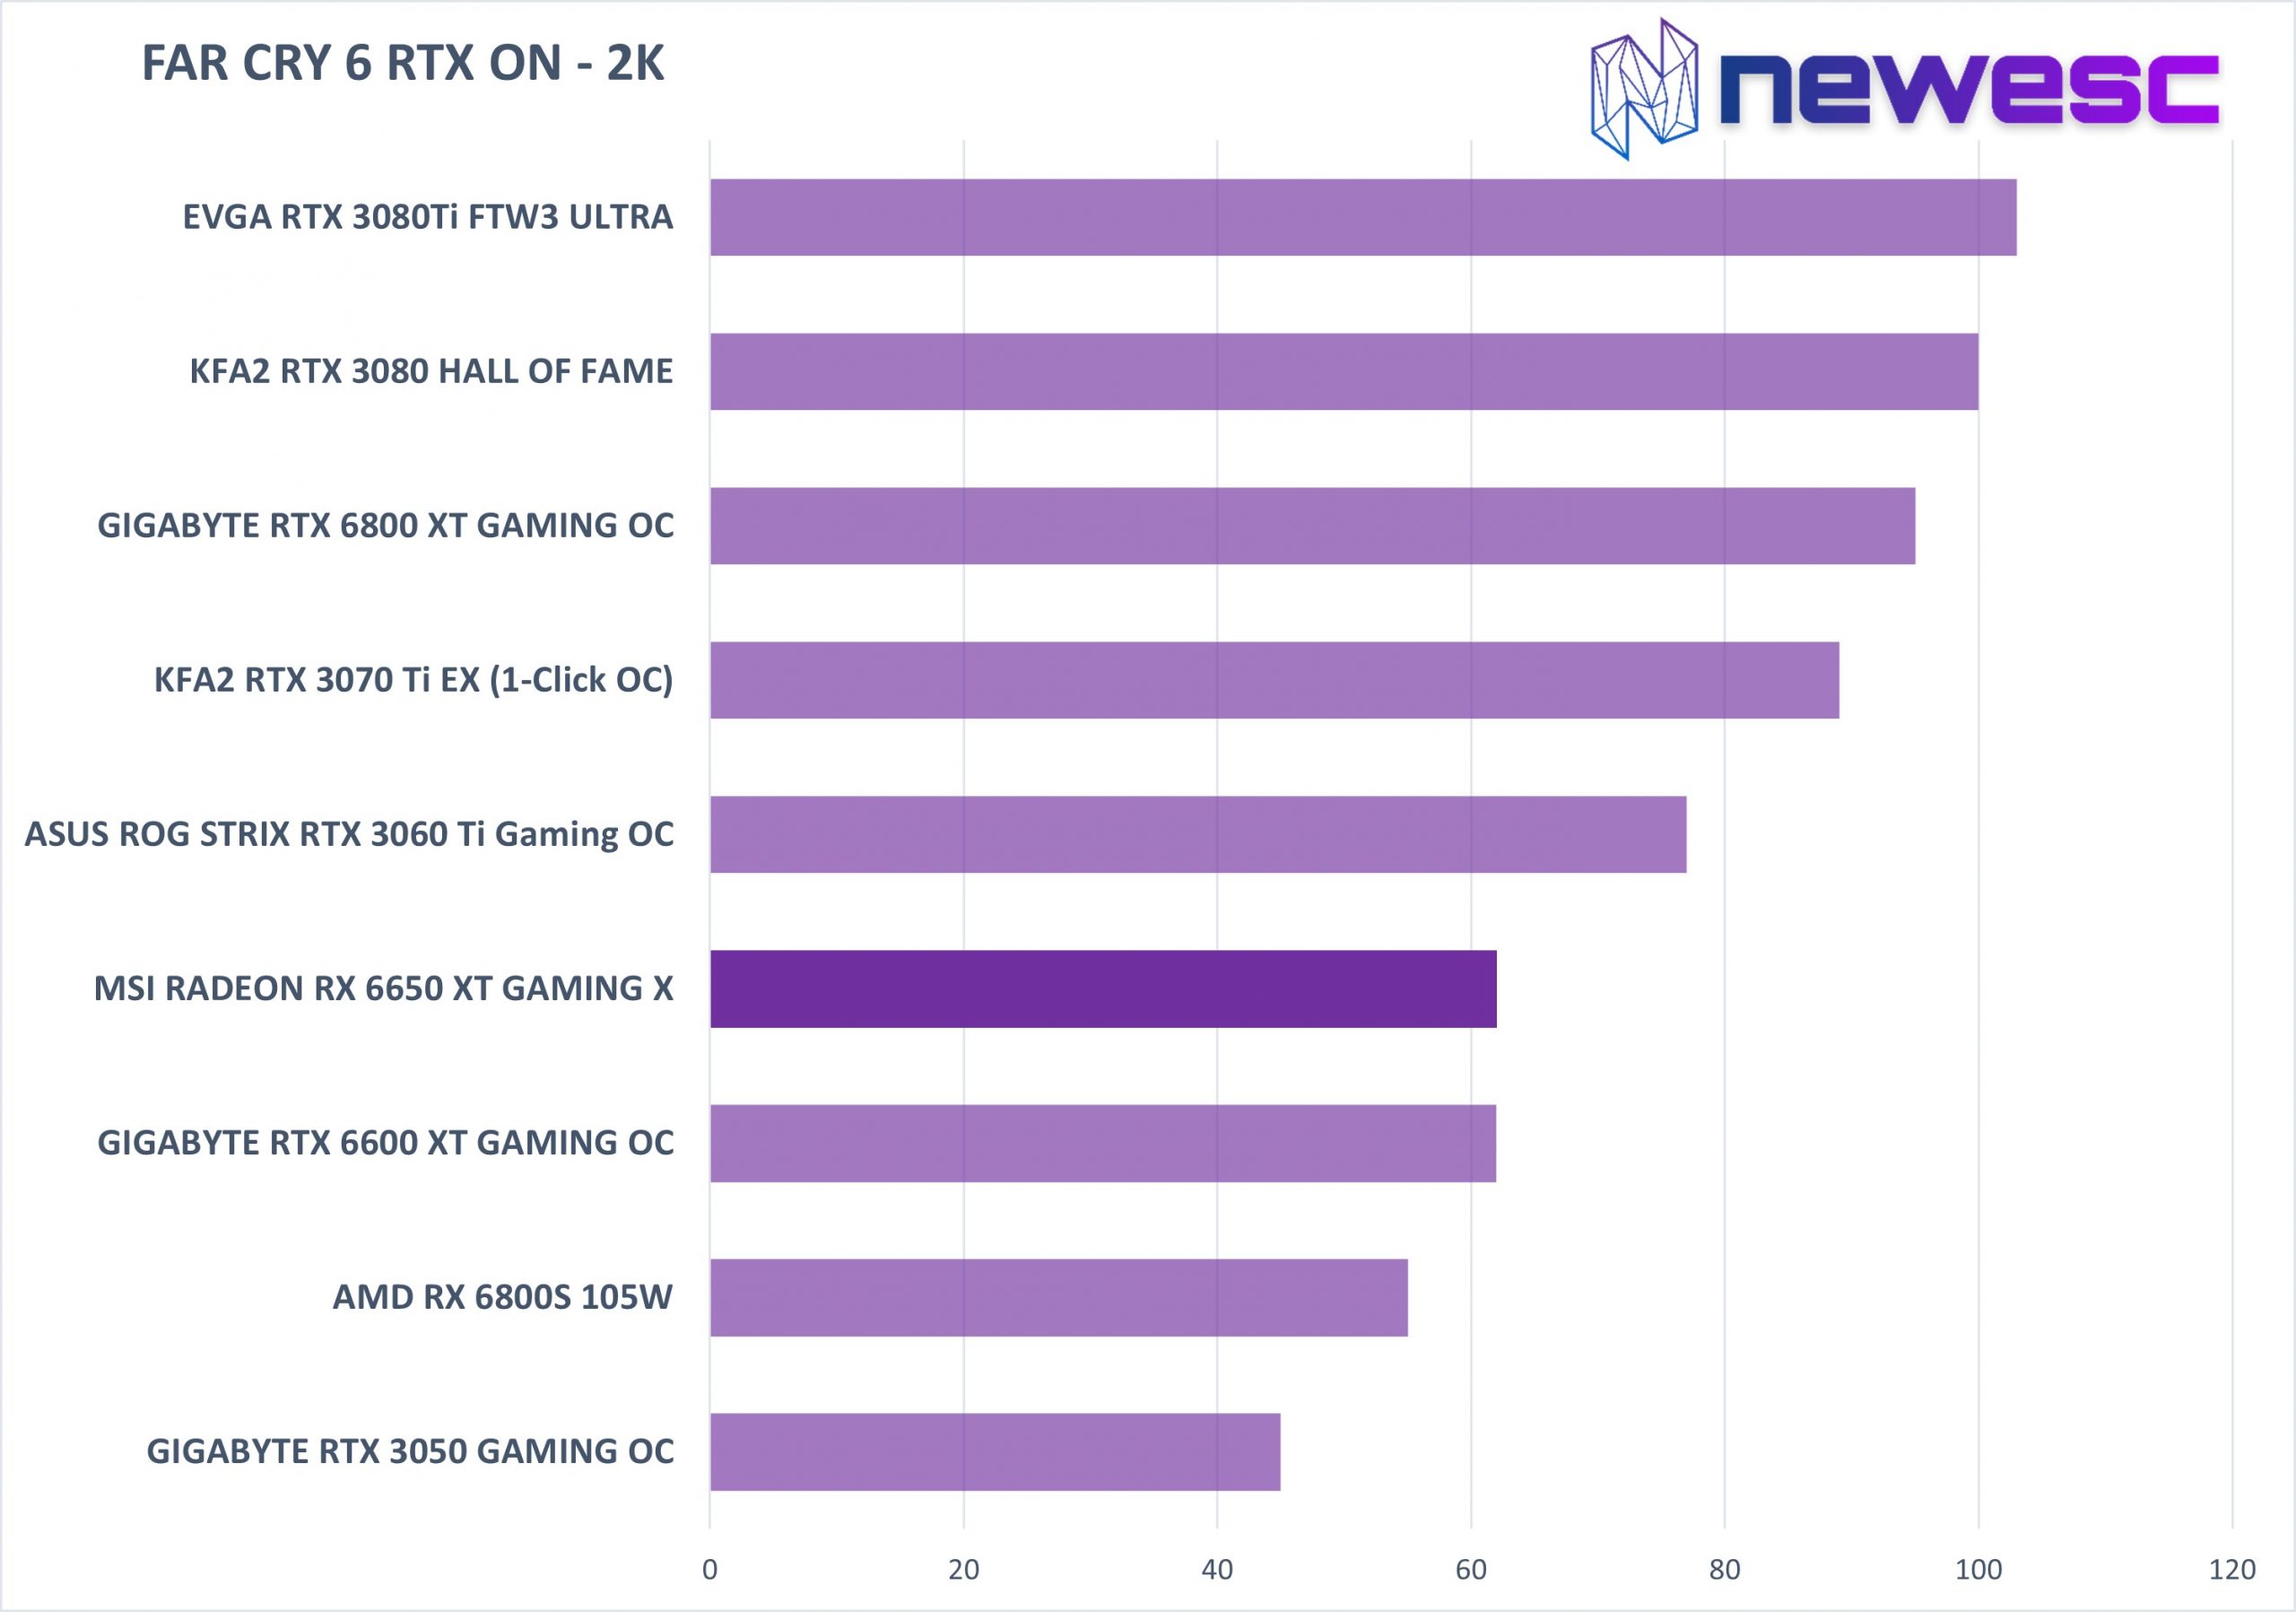 REVIEW MSI RADEON RX 6650 XT GAMING X FC6 RTX 2K